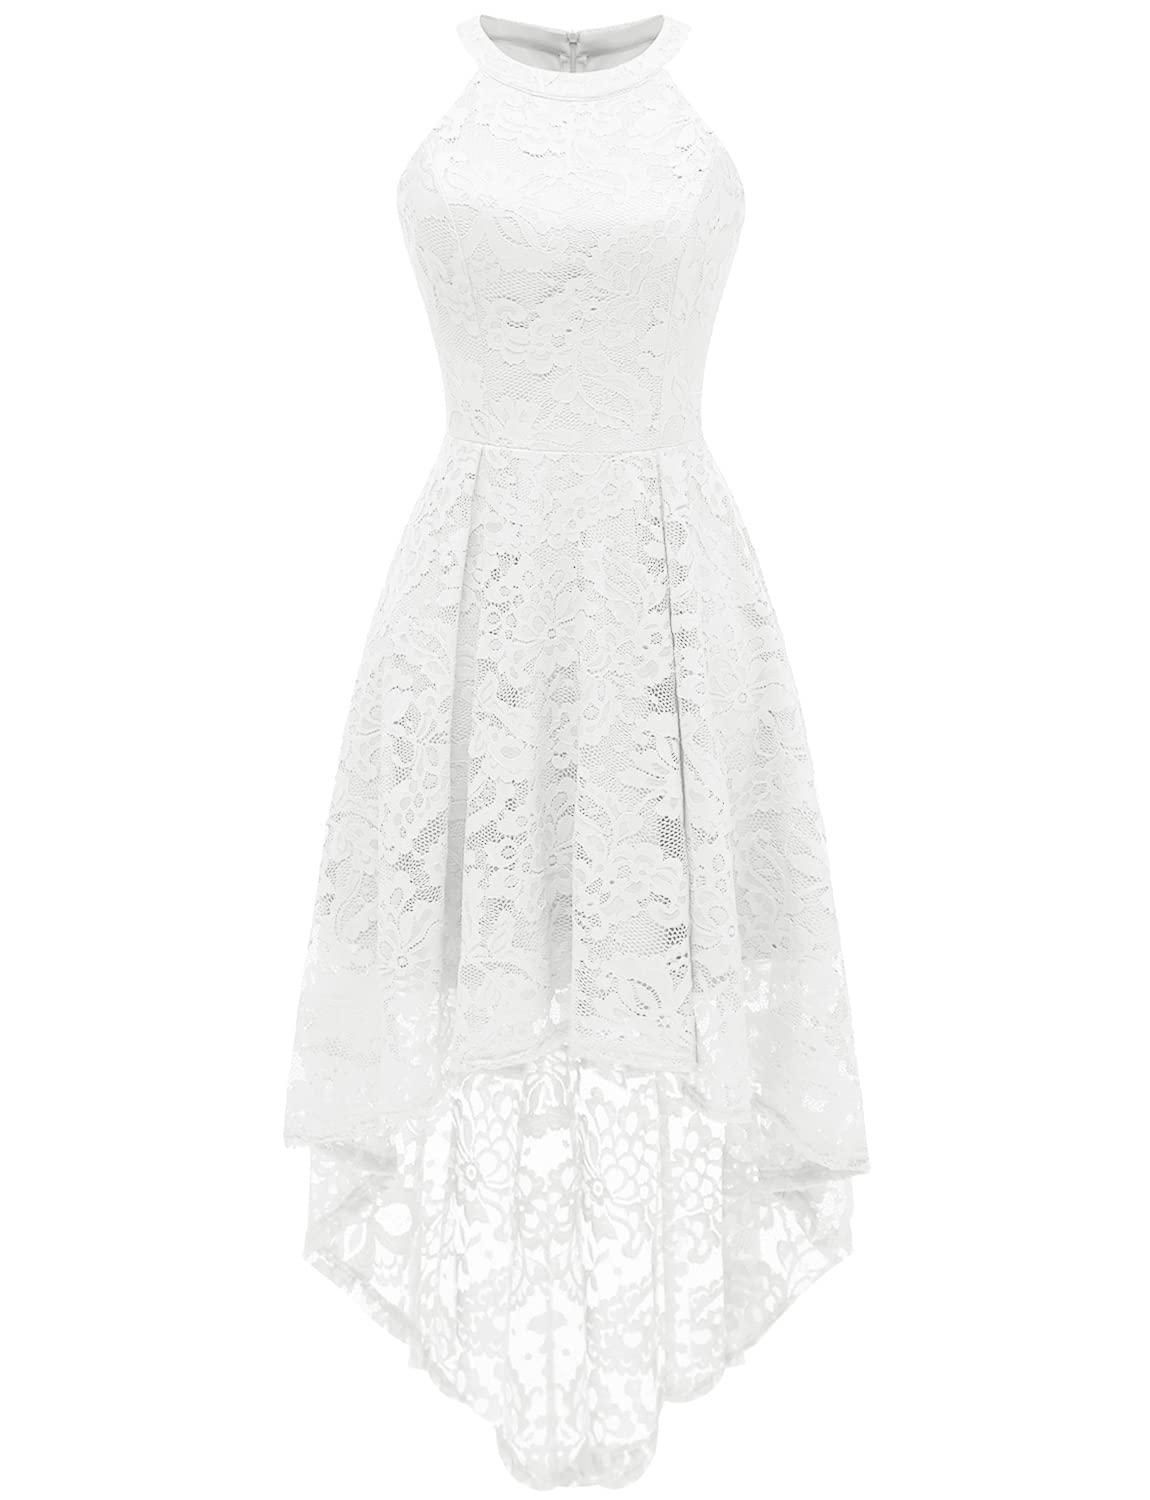 Dressystar 0028 Halter Floral Lace Cocktail Party Dress Hi-Lo Bridesmaid Dress White S